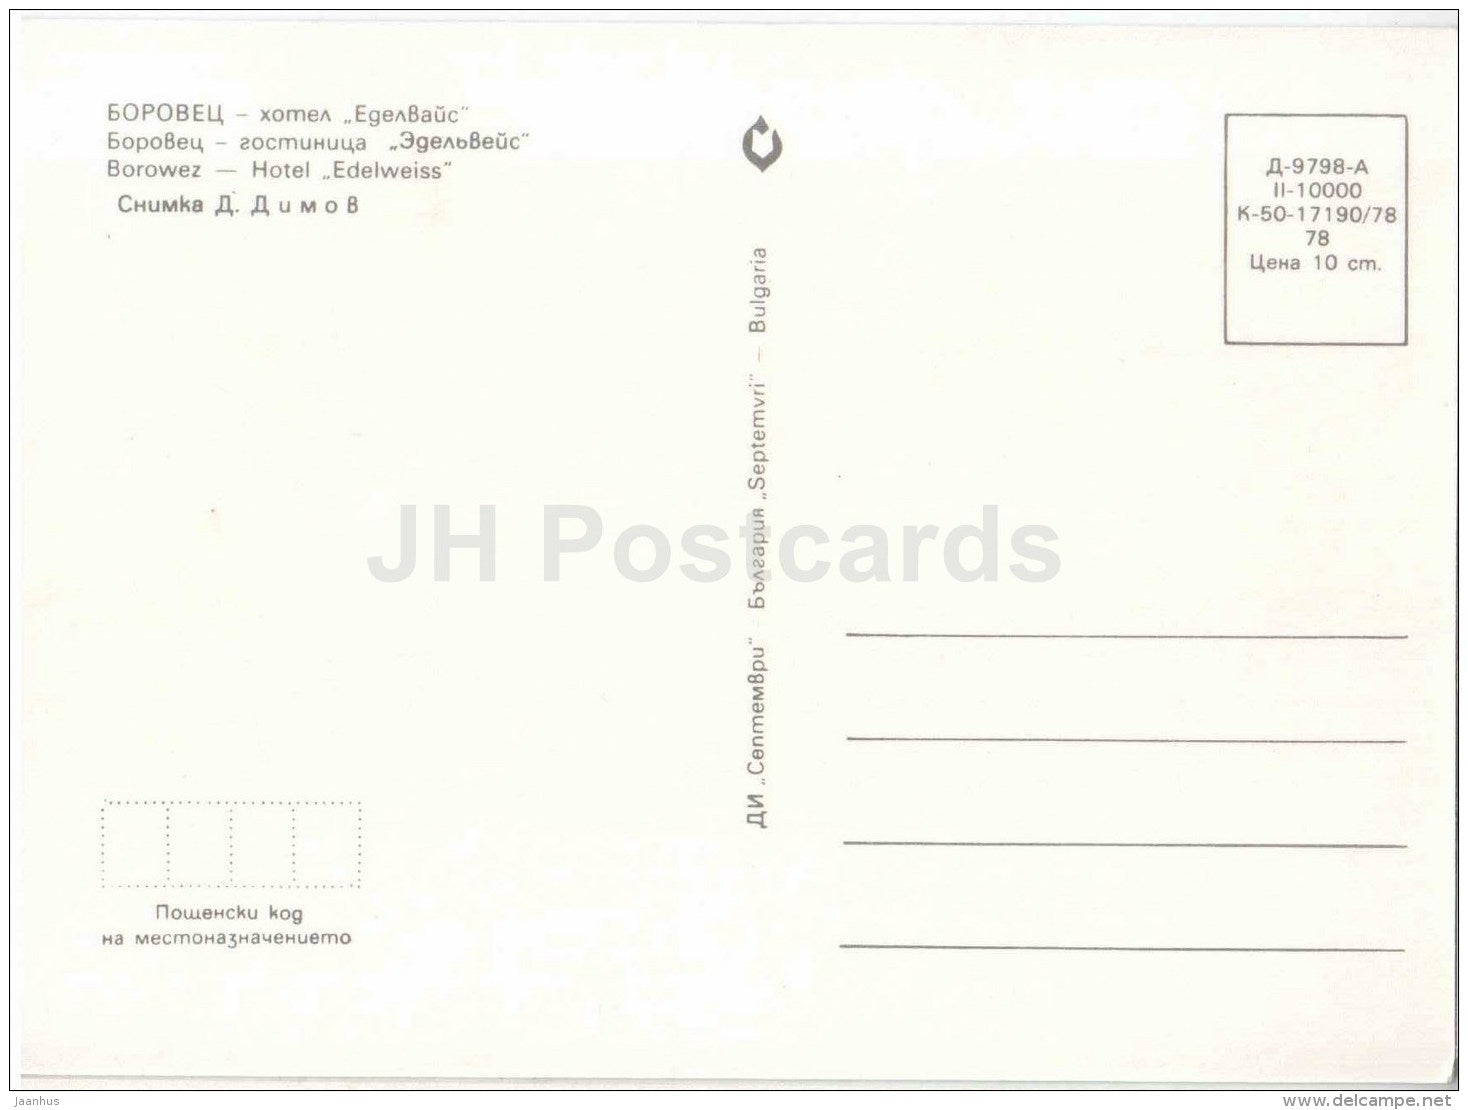 hotel Edelweiss - Borovets - 1978 - Bulgaria - unused - JH Postcards